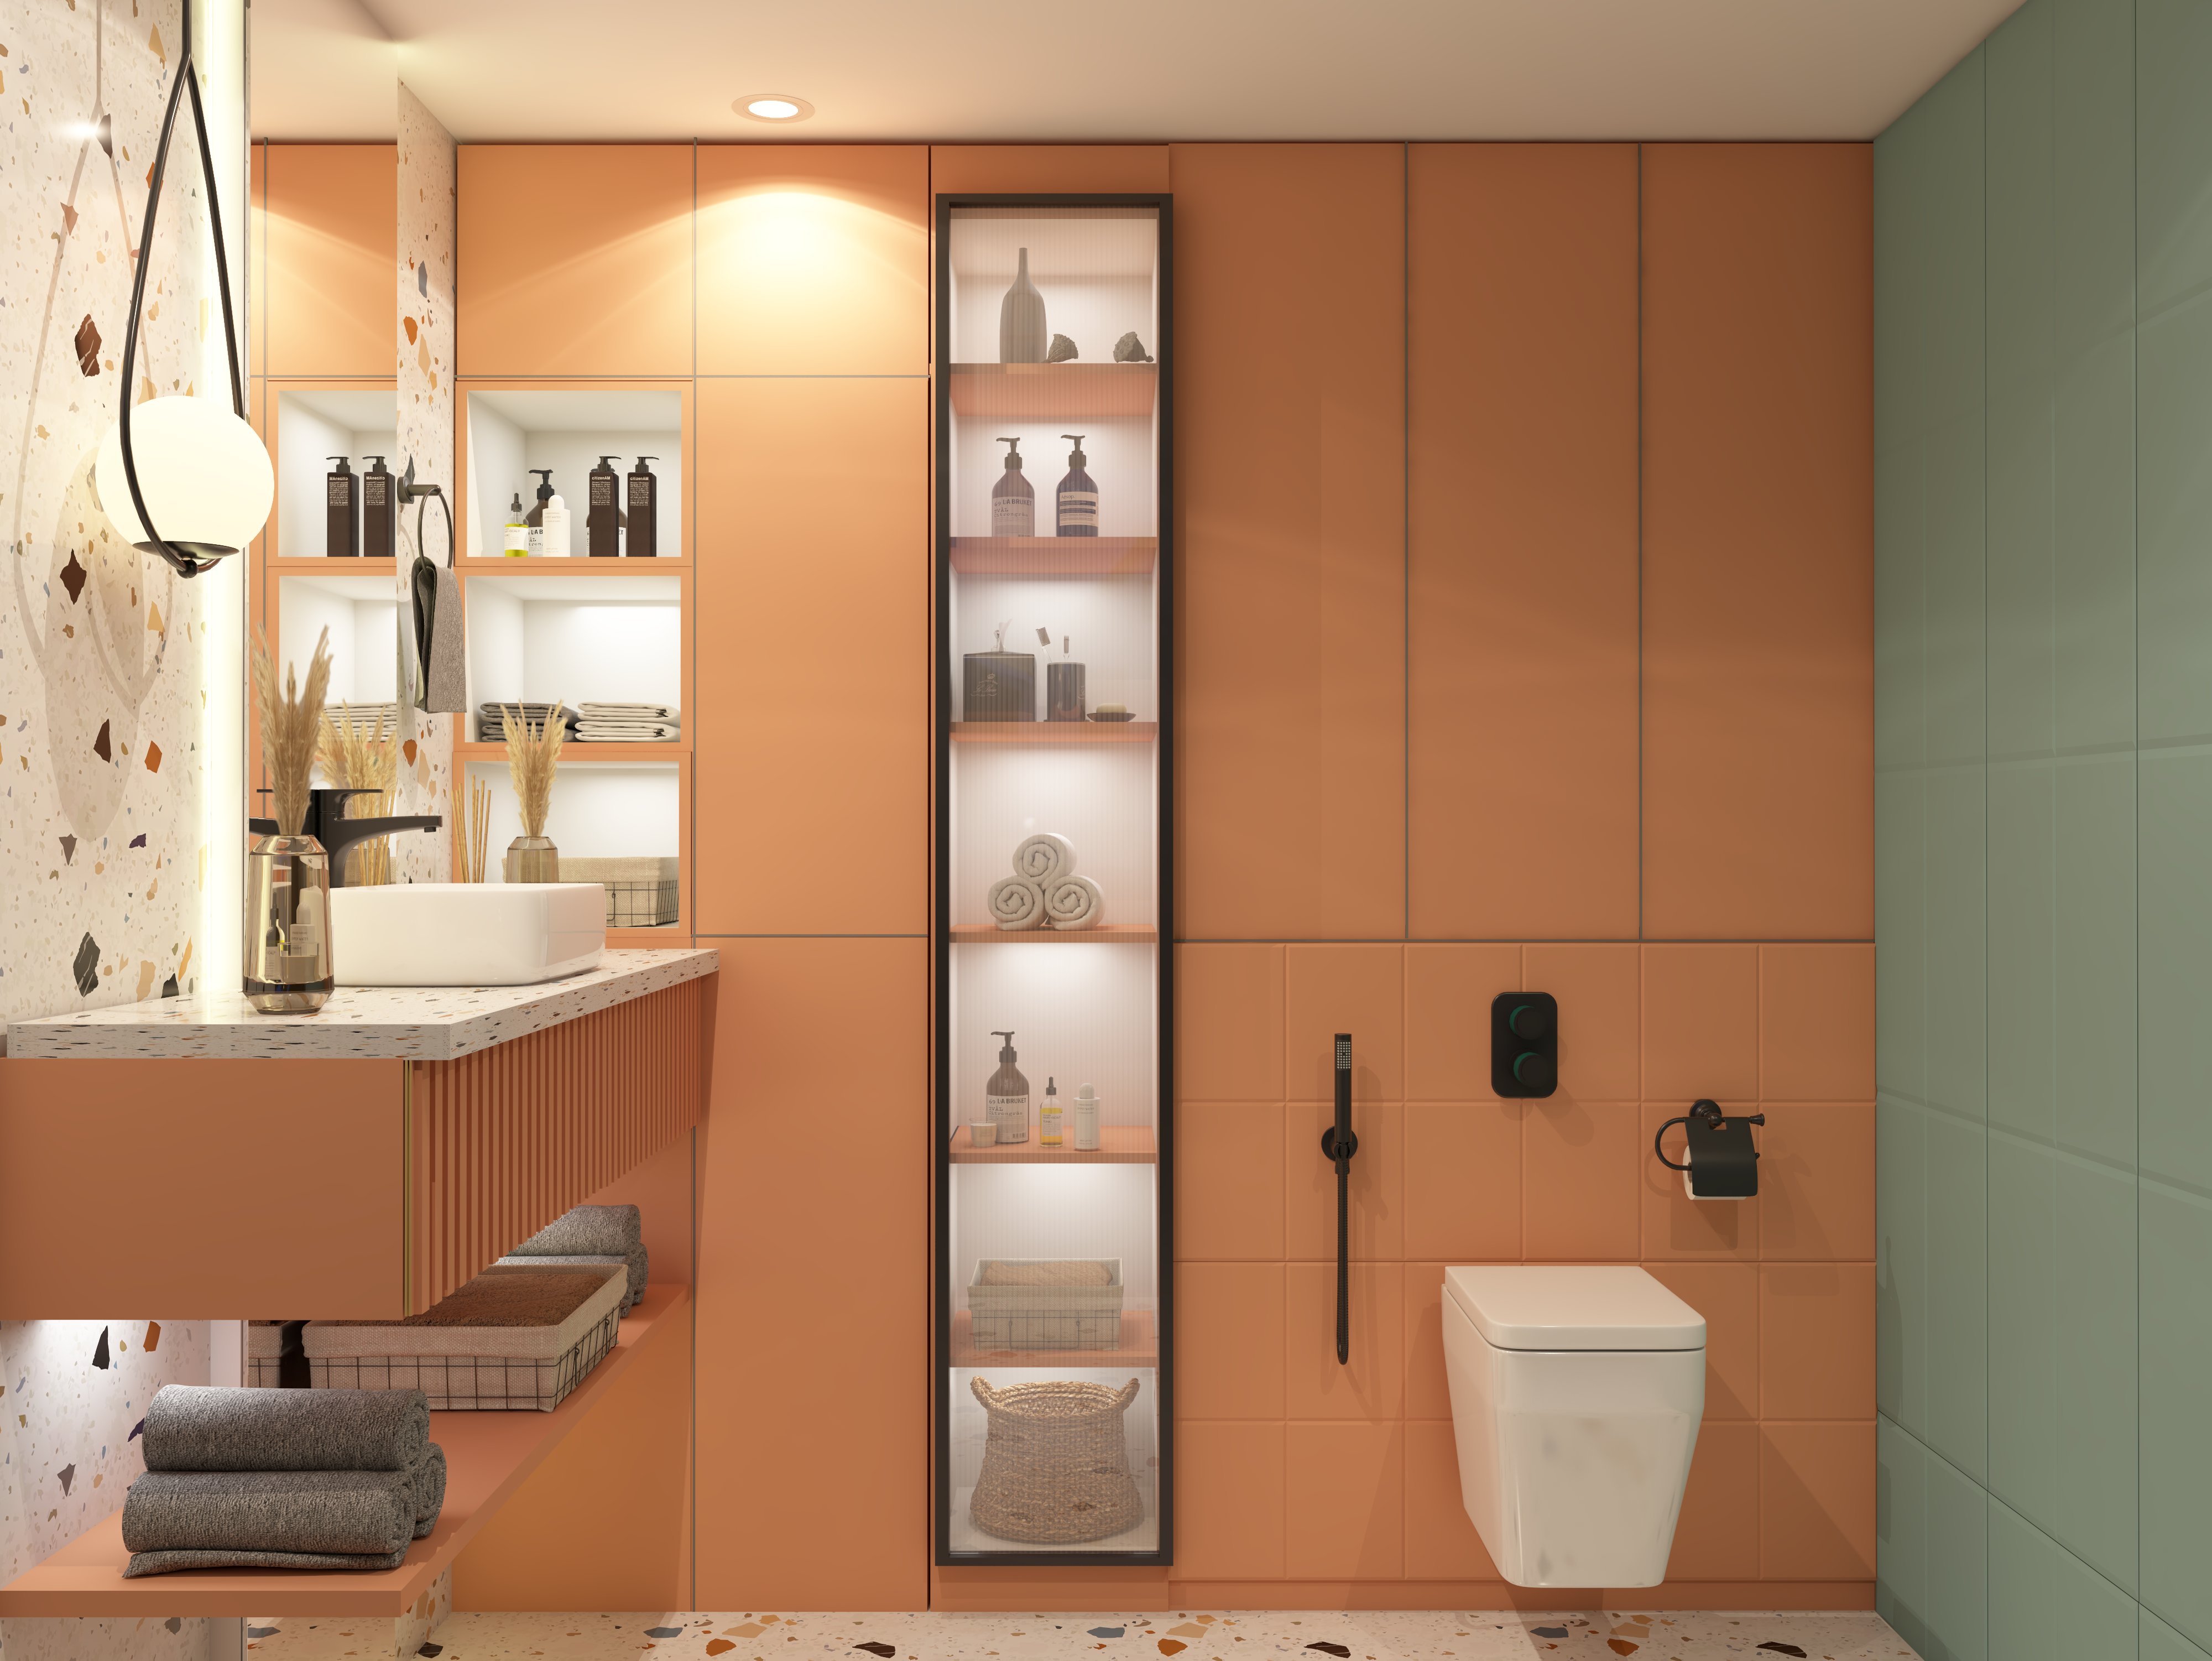 Zesty Orange Bath Design with Smart Storage for a Fresh, Organized Space - Beautiful Homes